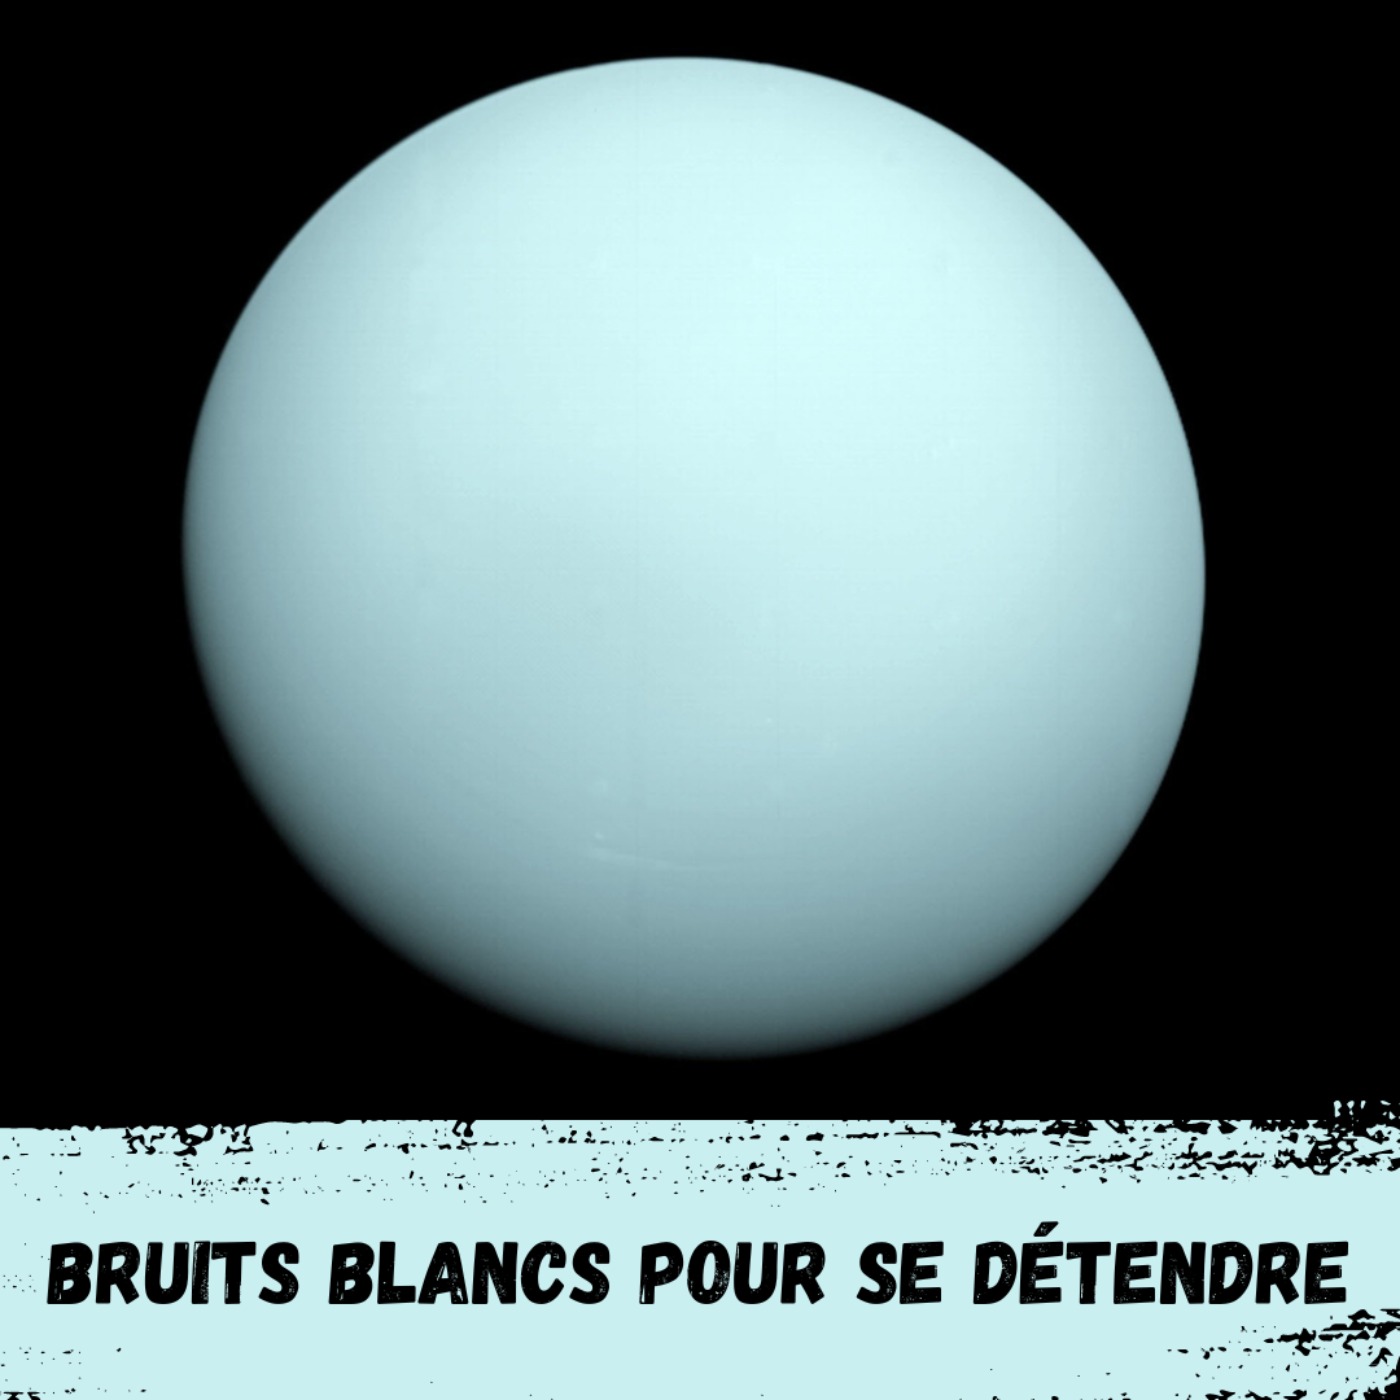 2h - Planète Uranus / Planet Uranus